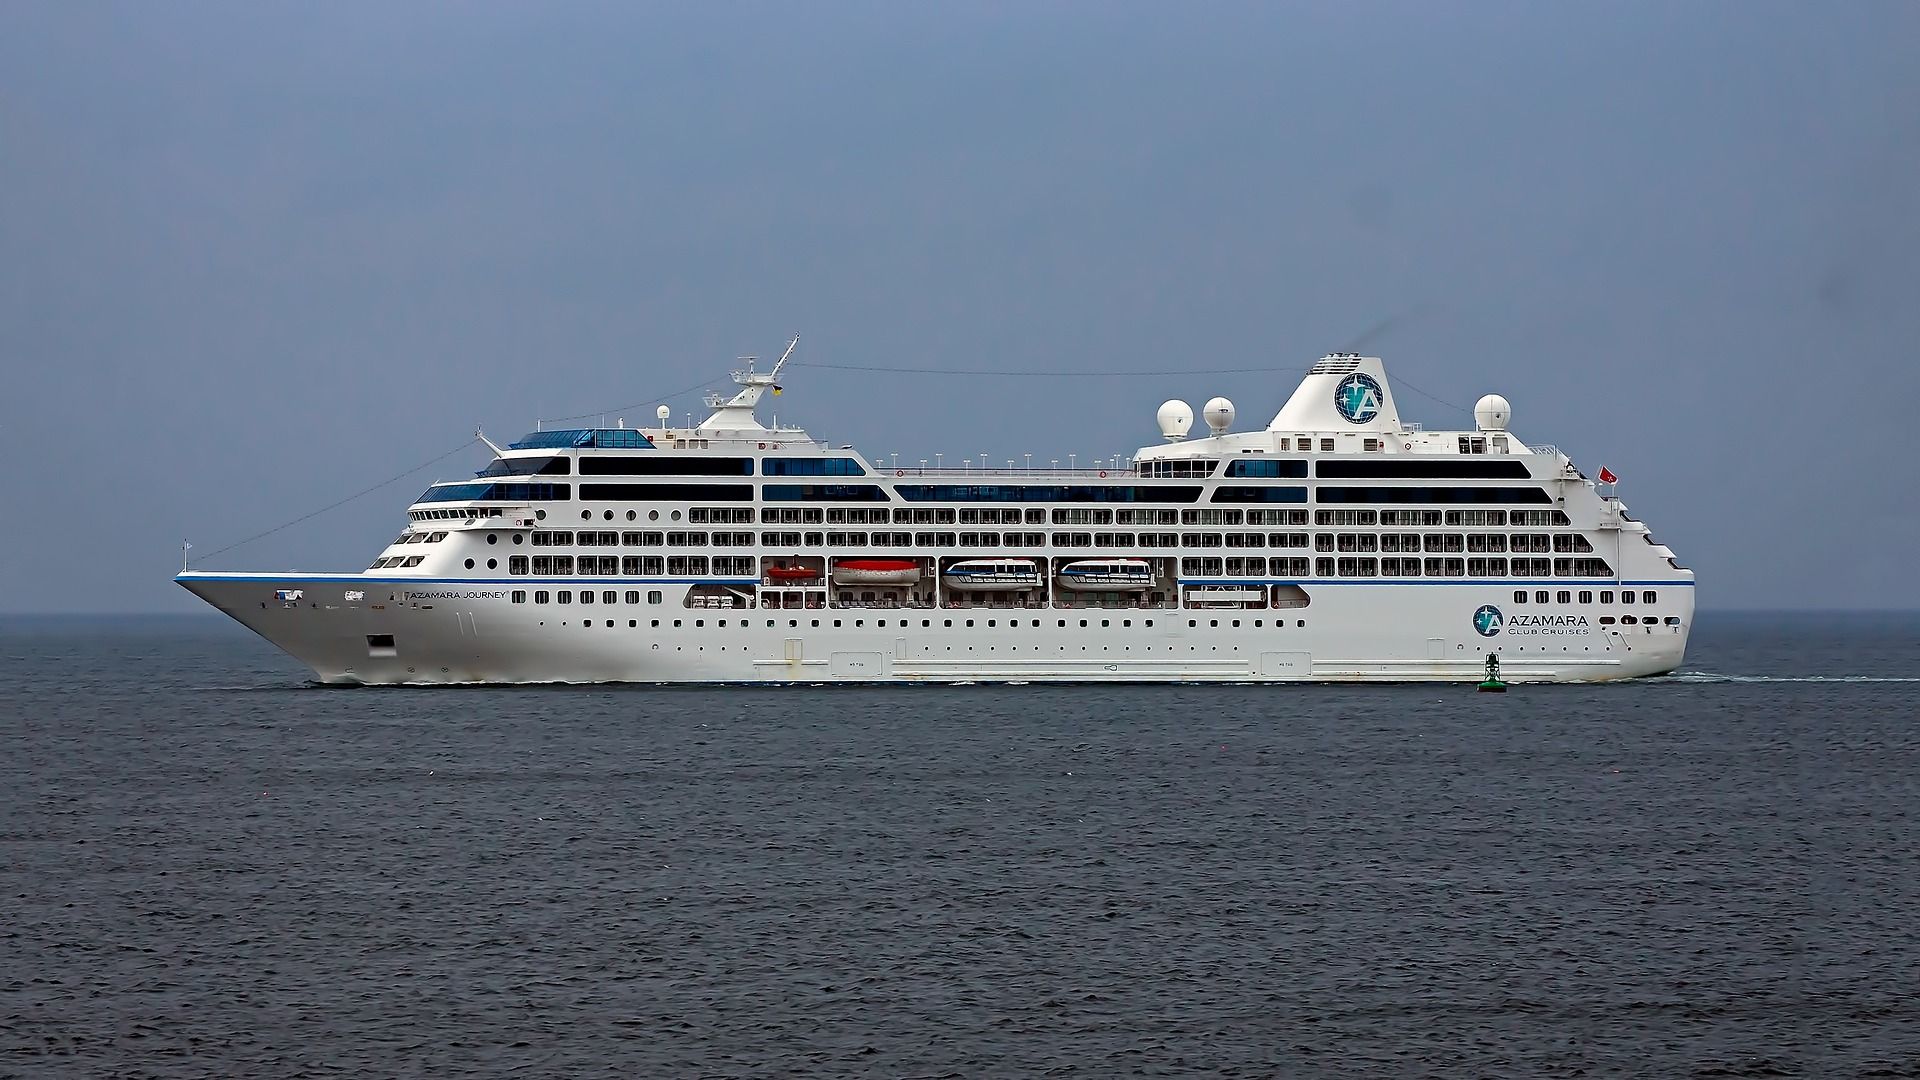 Azamara Cruise Ship on a voyage